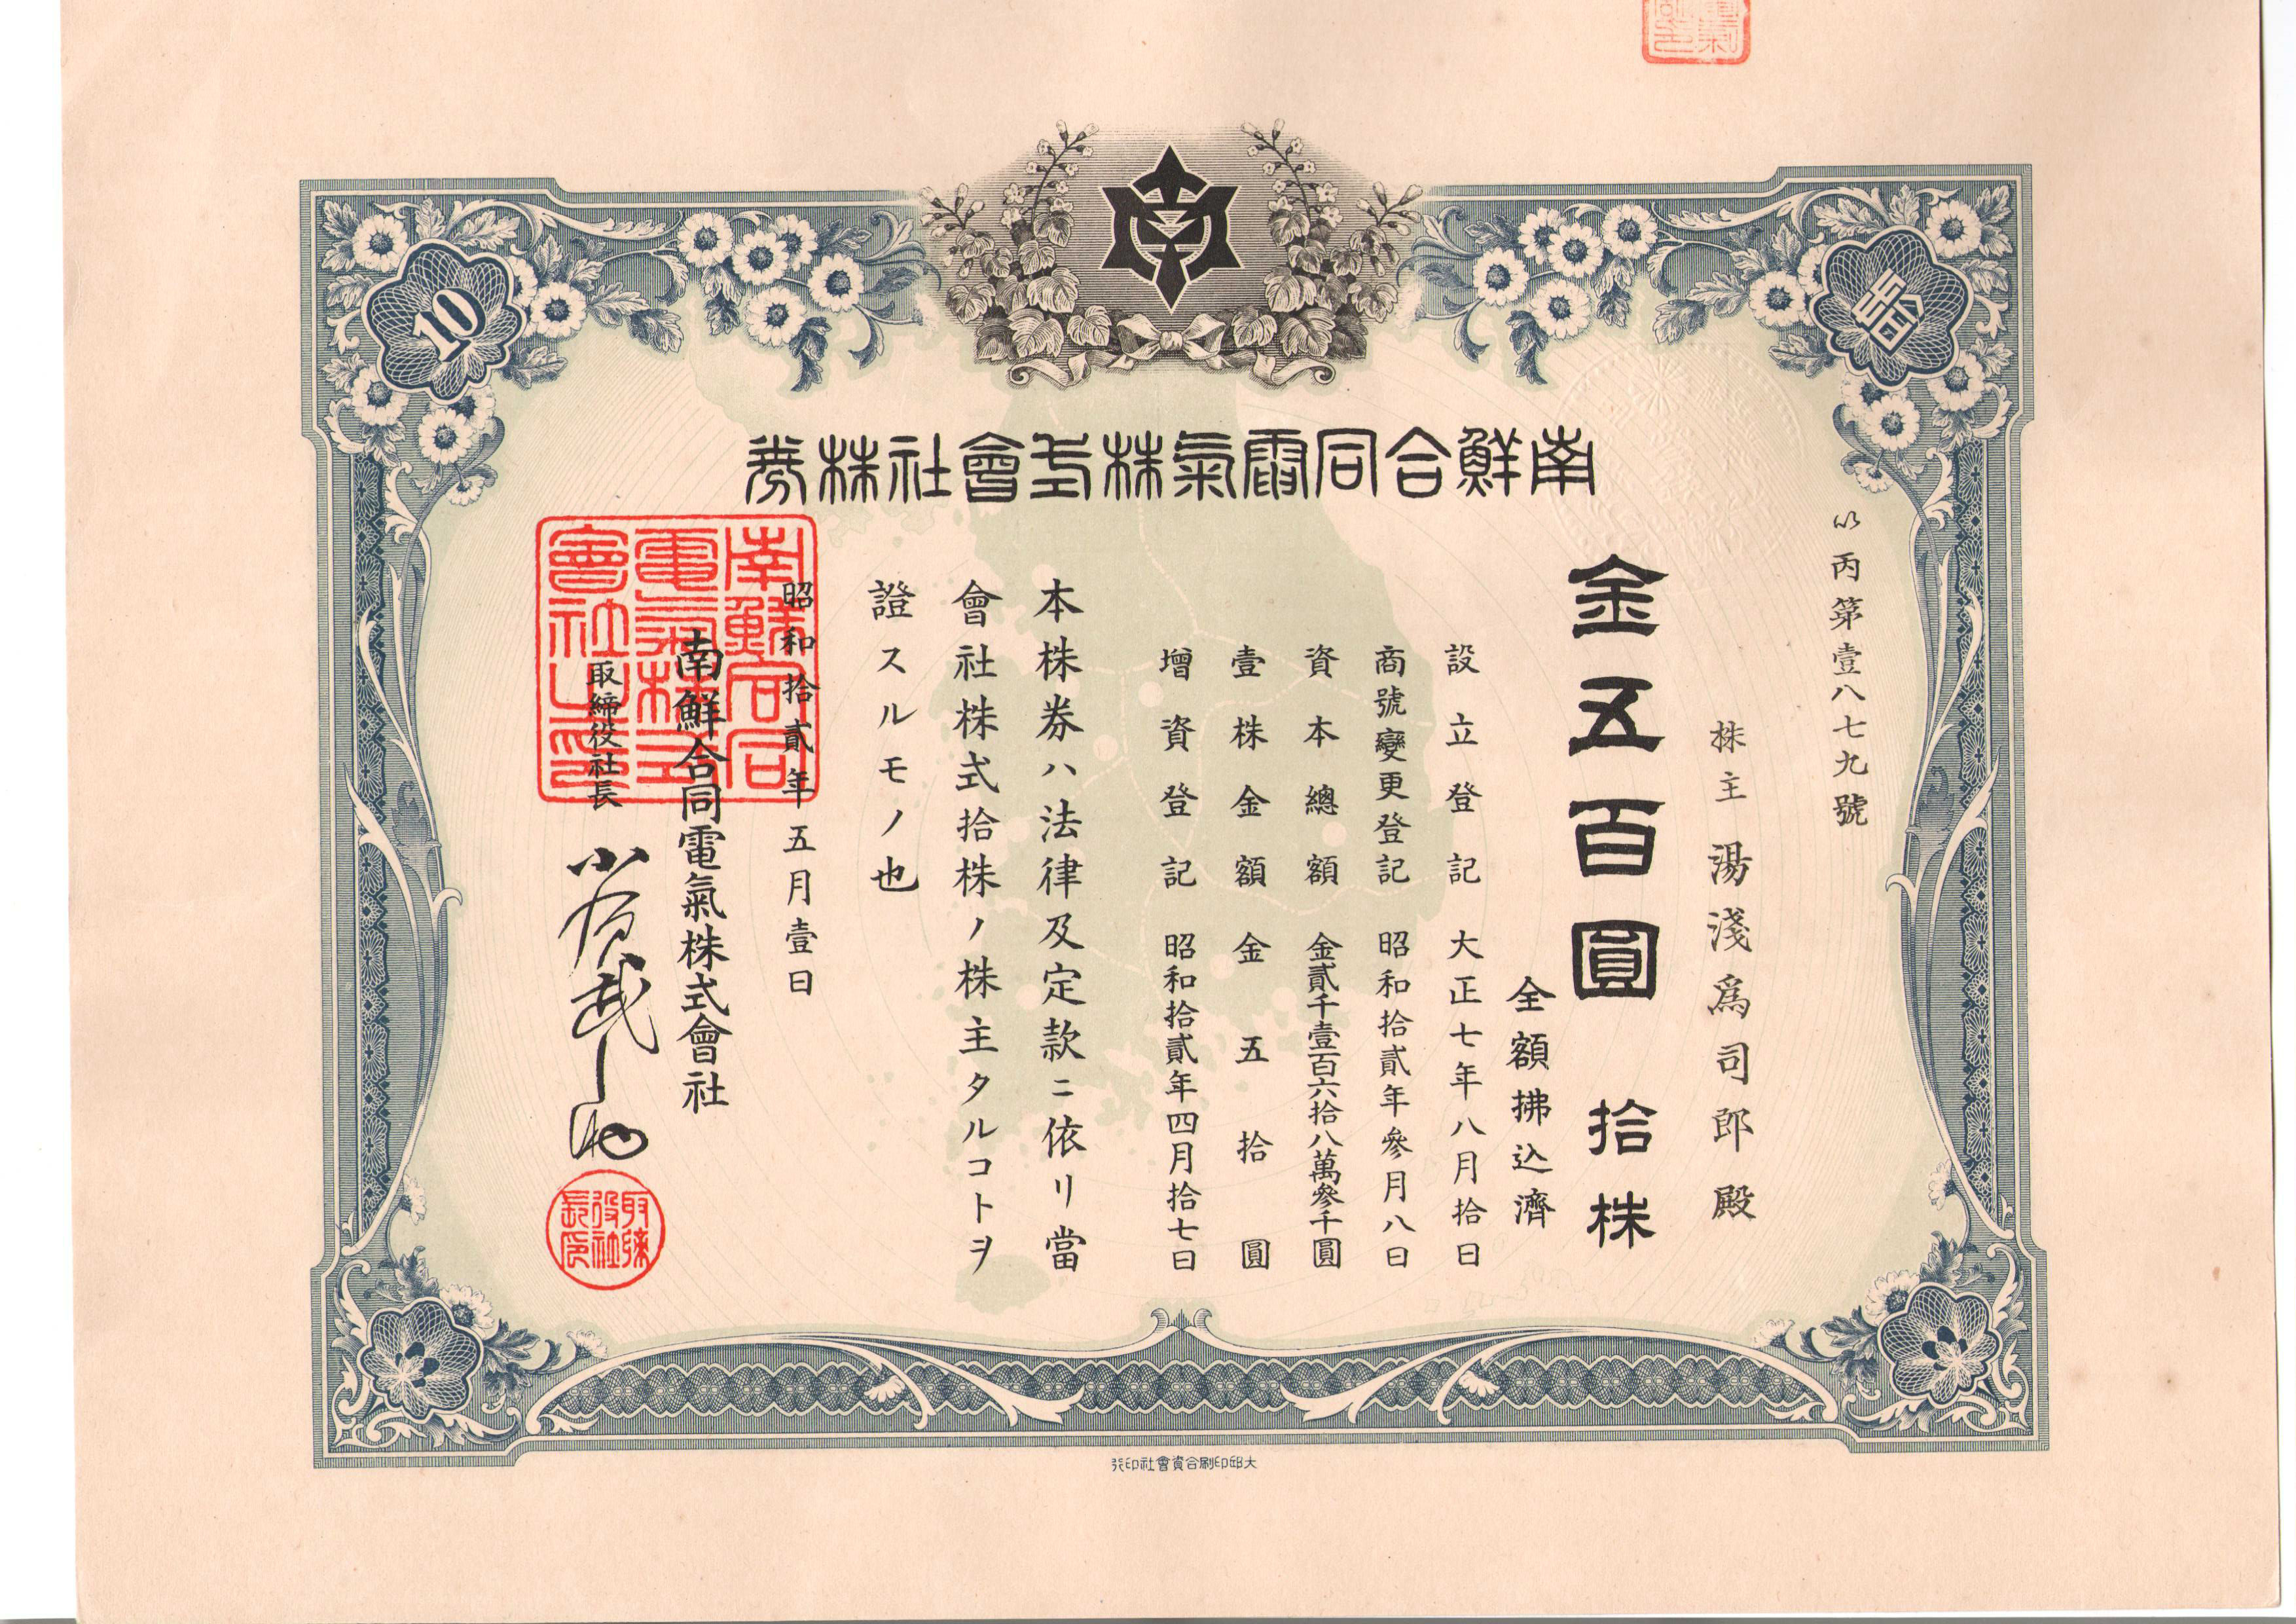 S4150, Korea Contract Electricity Co., Ltd, Stock Certificate 10 Shares, 1945 (Korea Map)